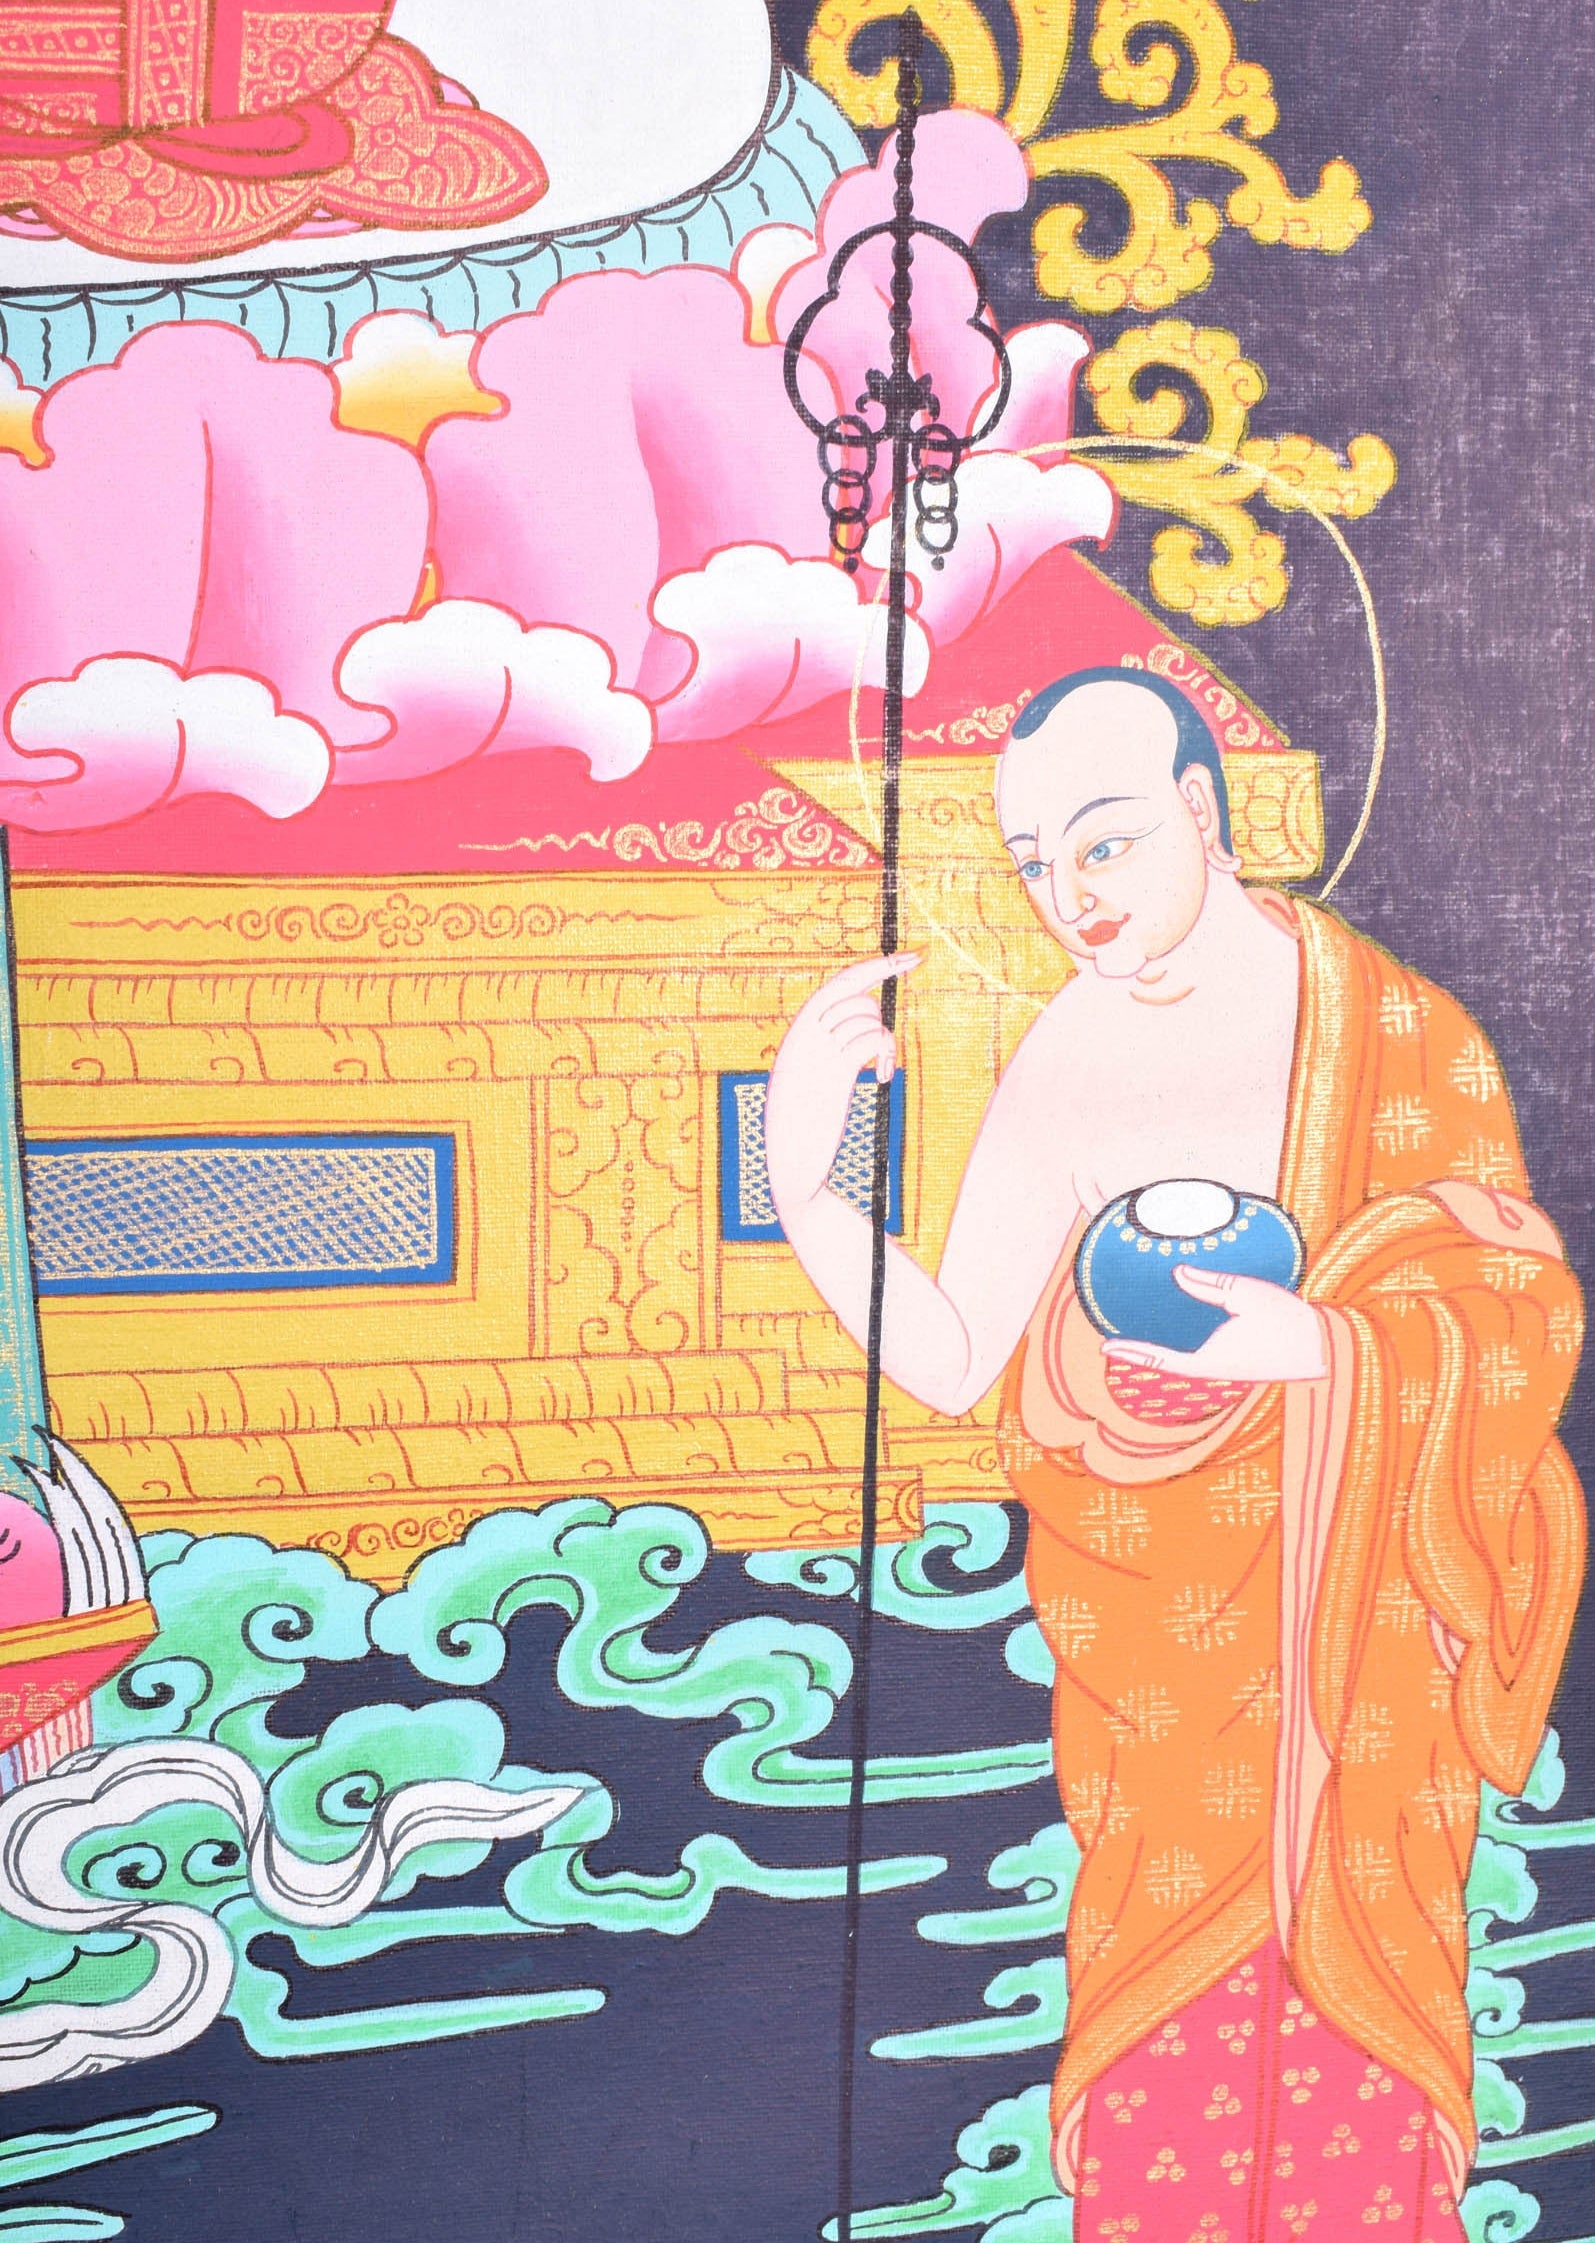 Tibetan Thangka painting of Shakyamuni Buddha - Lucky Thanka